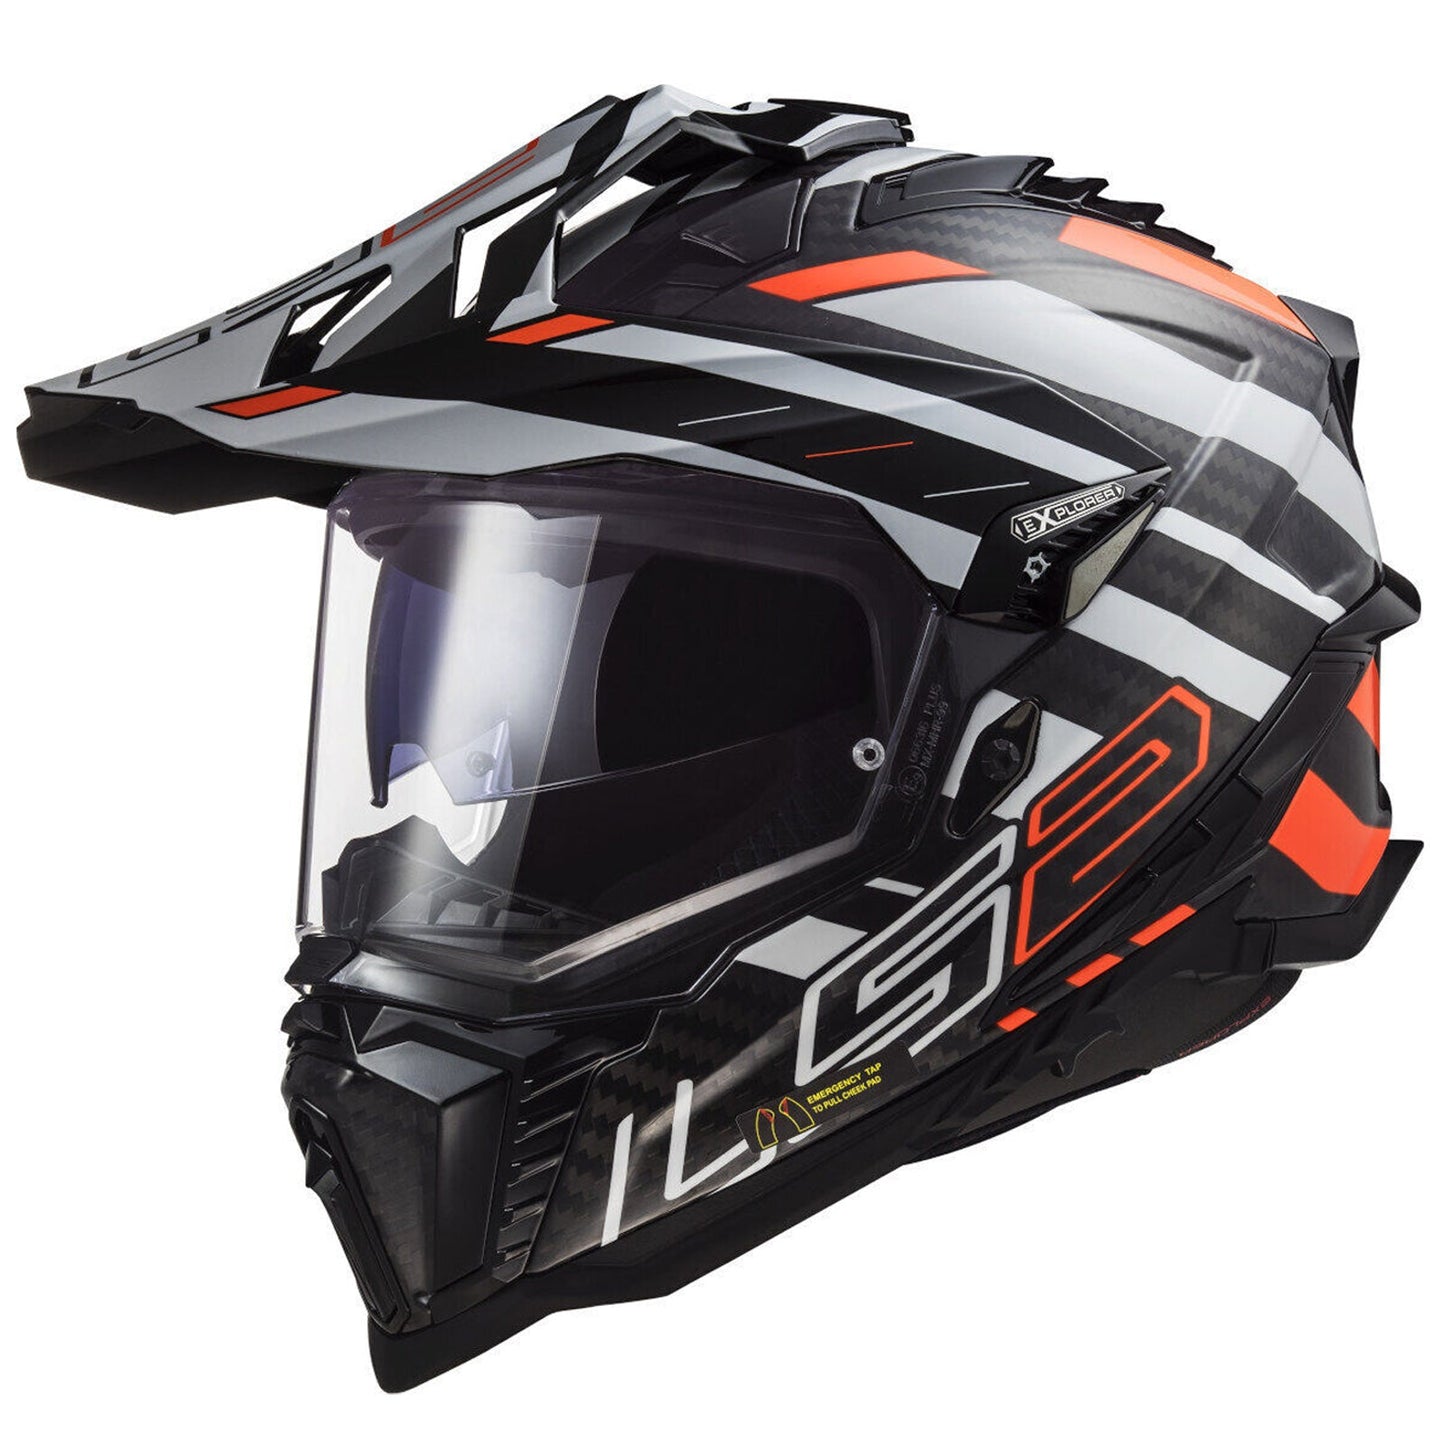 Riderwear | LS2 MX701 EXPLORER Carbon Helmet - Edge Black Orange